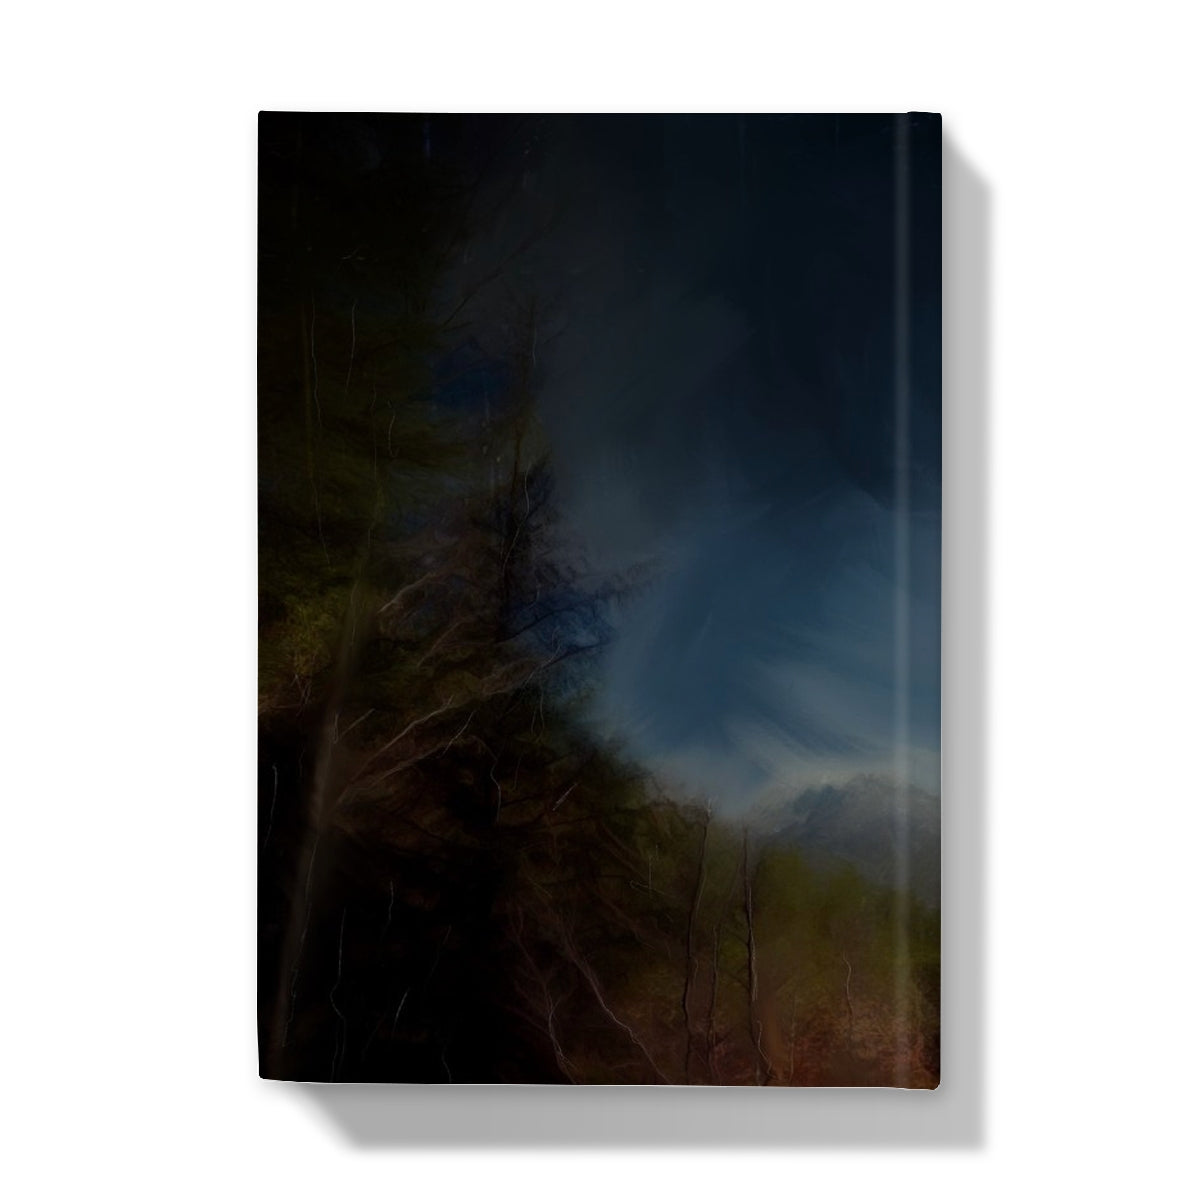 Glencoe Lochan Moonlight Art Gifts Hardback Journal-Journals & Notebooks-Scottish Lochs & Mountains Art Gallery-Paintings, Prints, Homeware, Art Gifts From Scotland By Scottish Artist Kevin Hunter